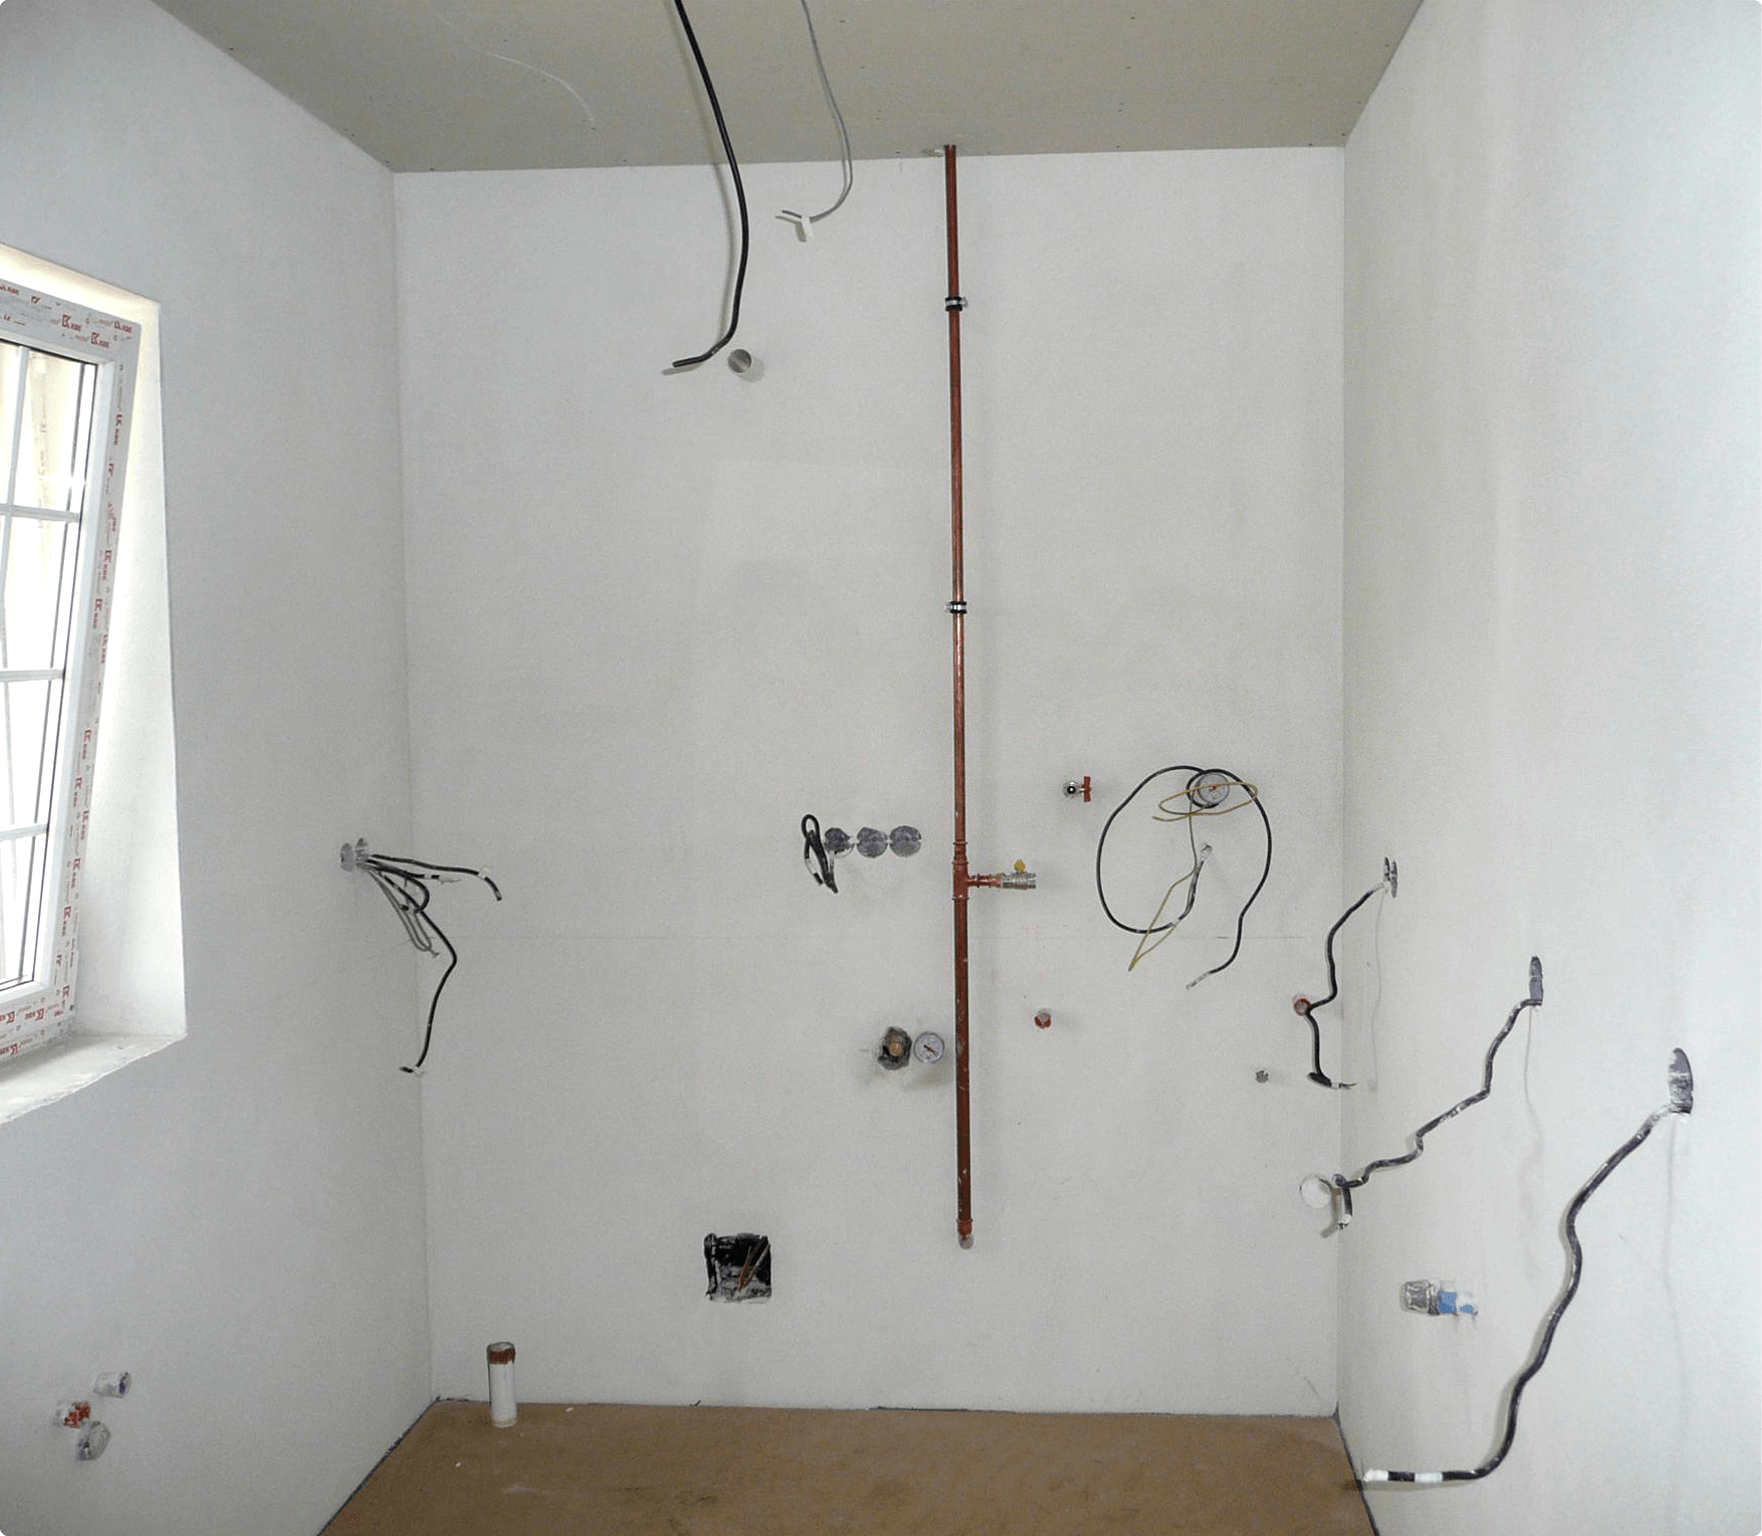 A room for technics